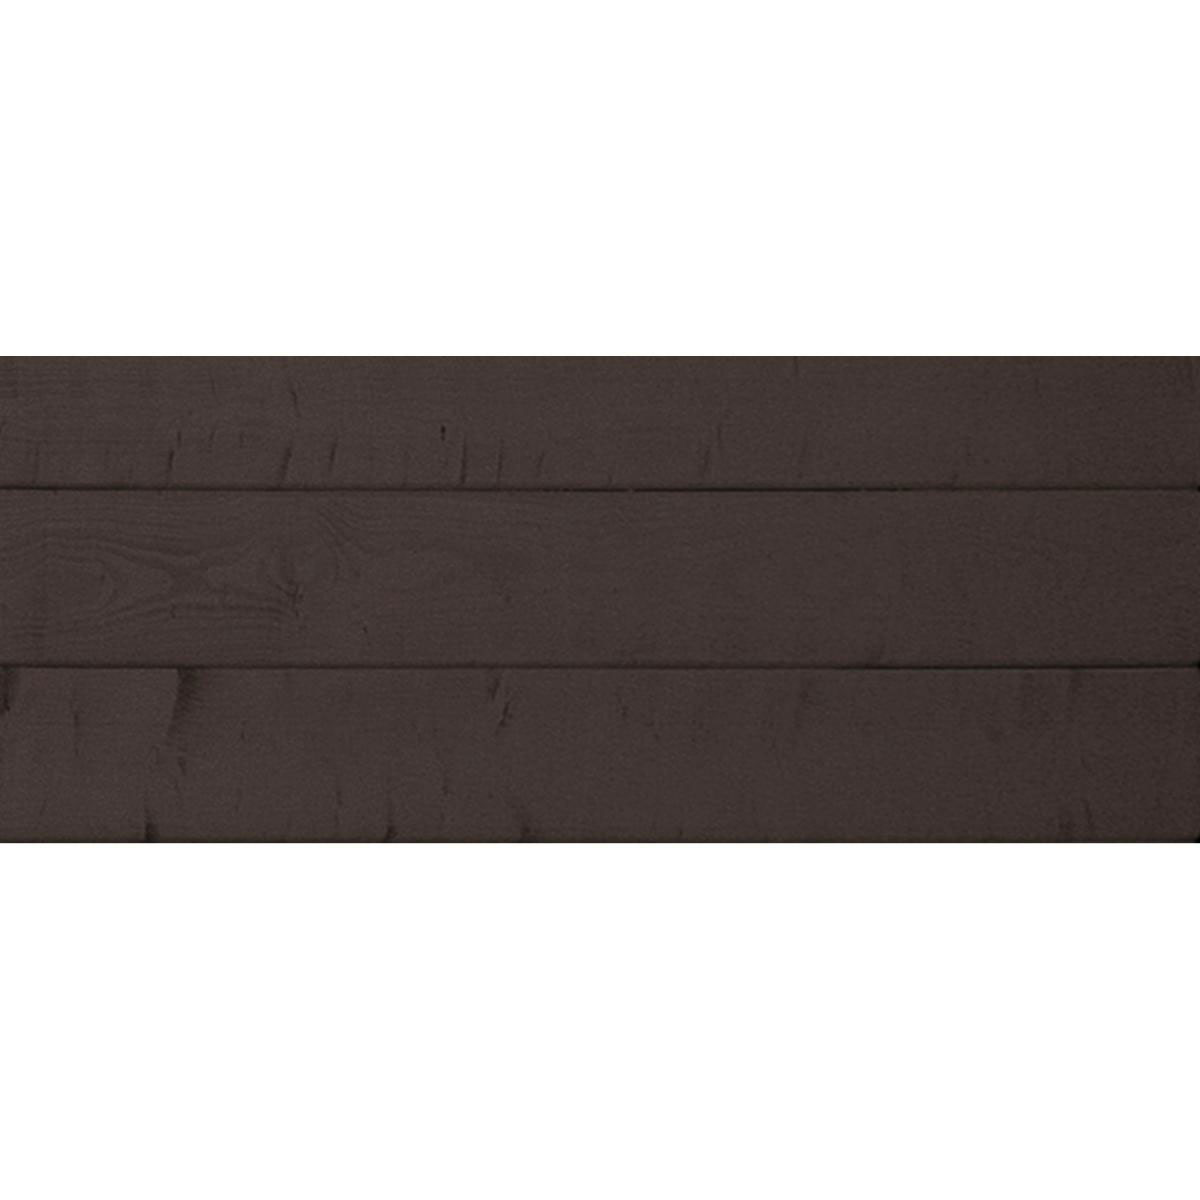 Profi-Hochbeet „669 B“, 21mm, schwarz